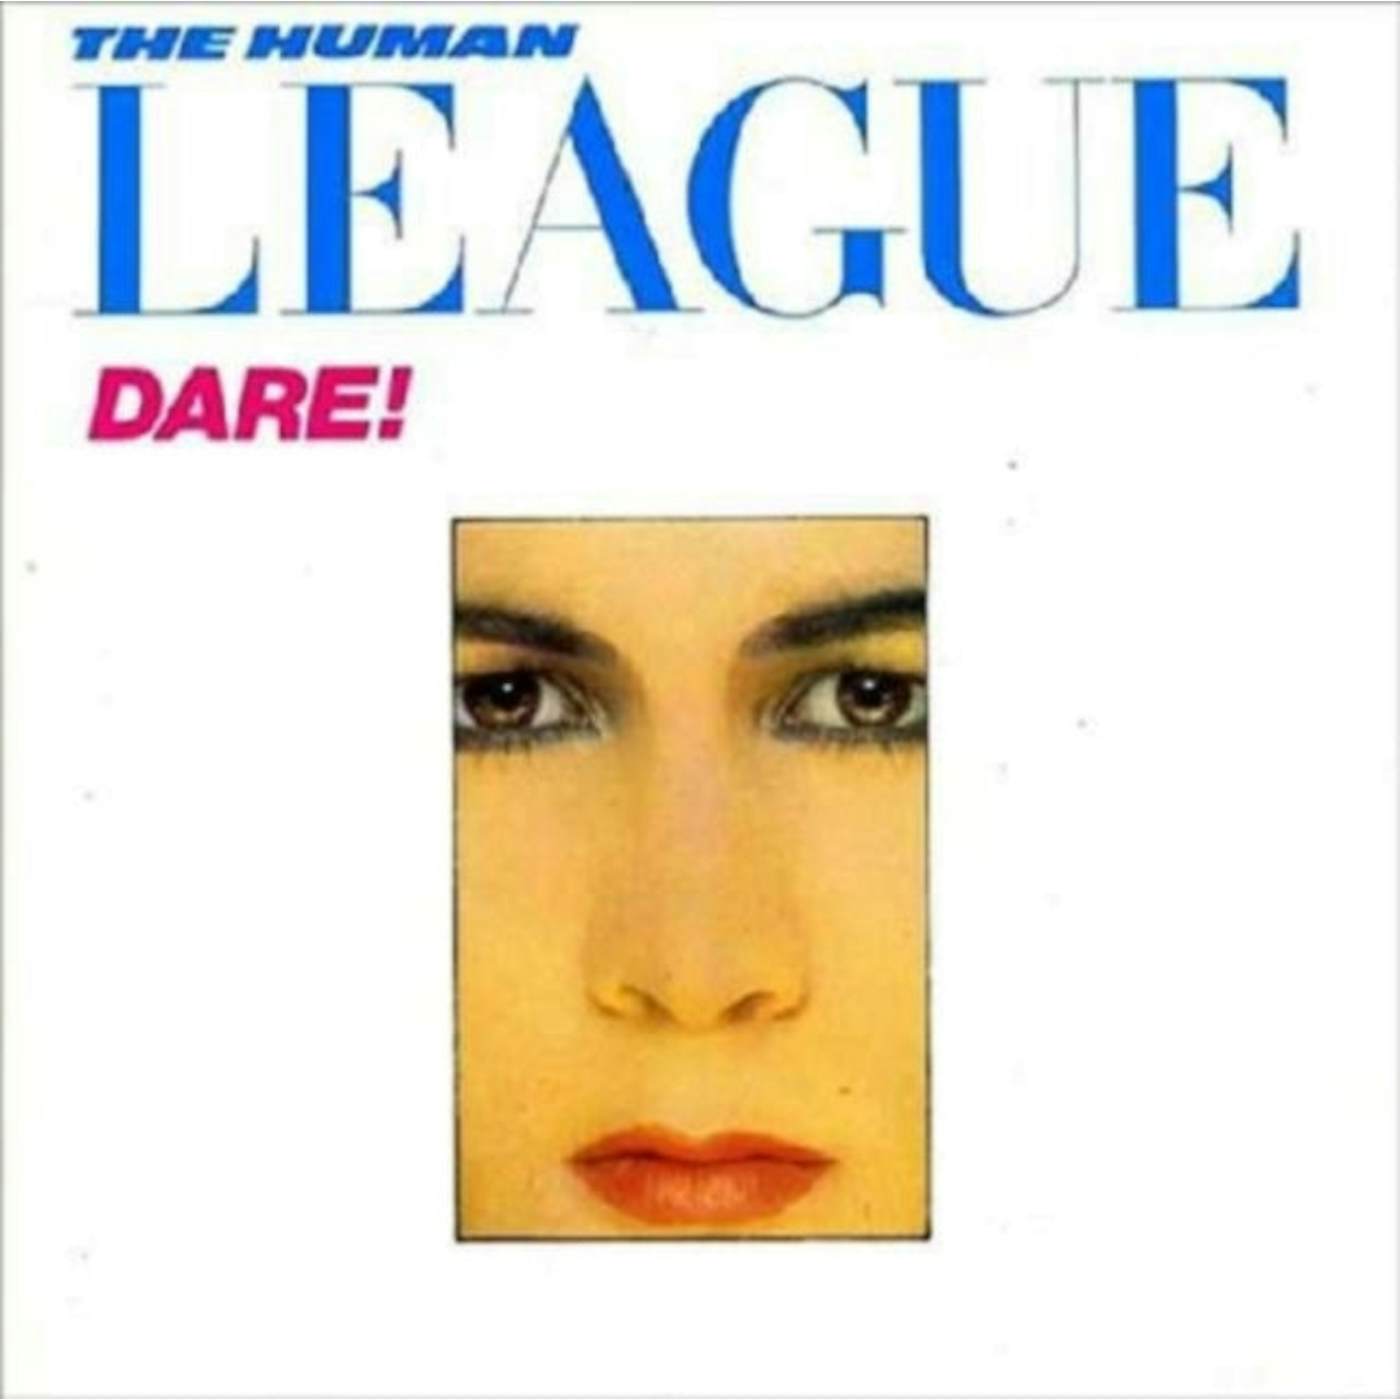 The Human League LP Vinyl Record - Dare